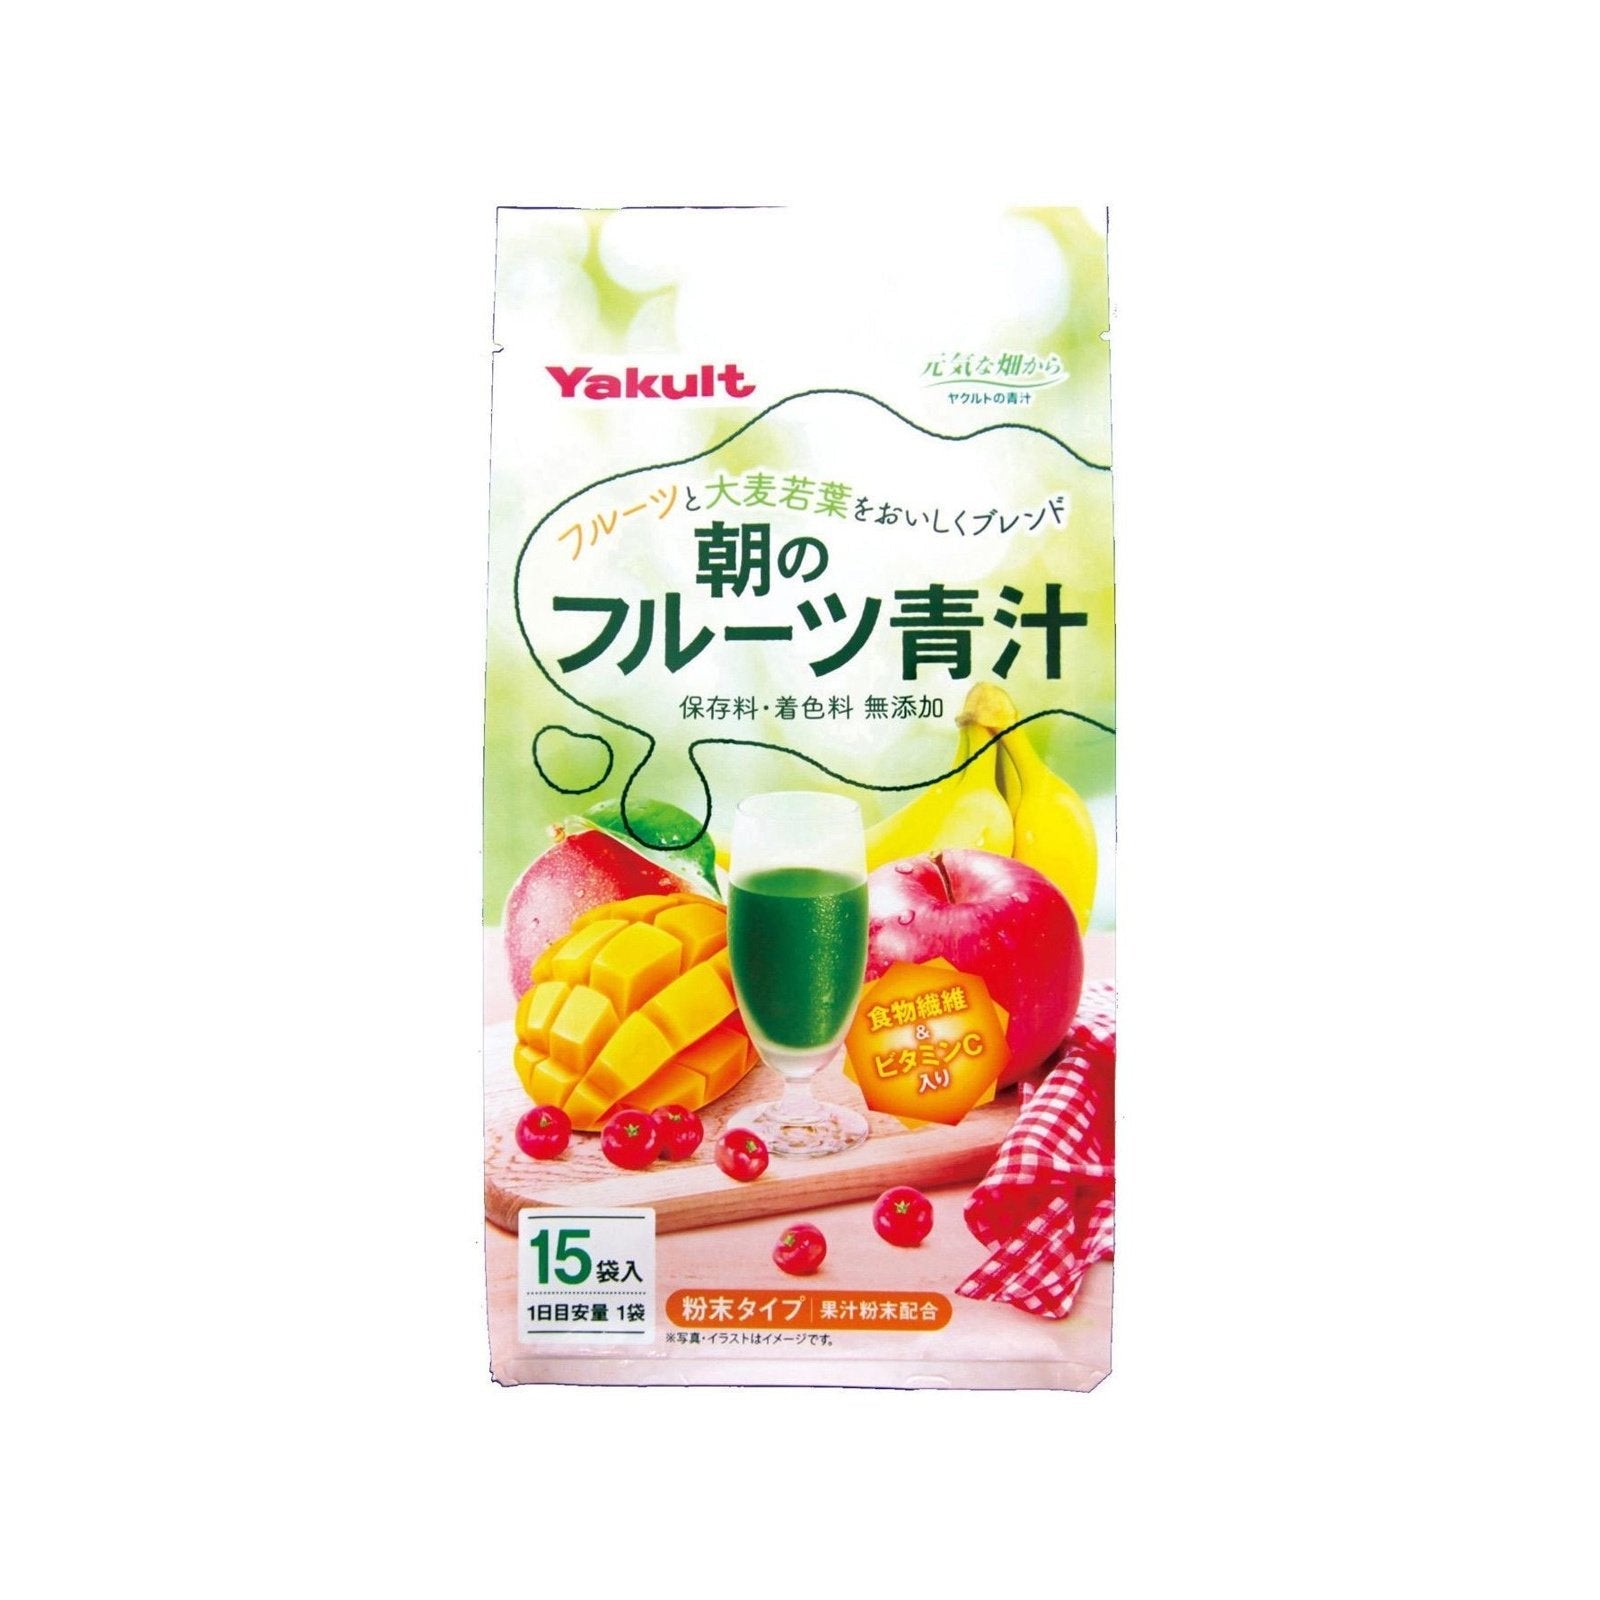 Yakult Fruit-Based Green Juice Nutritious Health Drink 15 Sticks